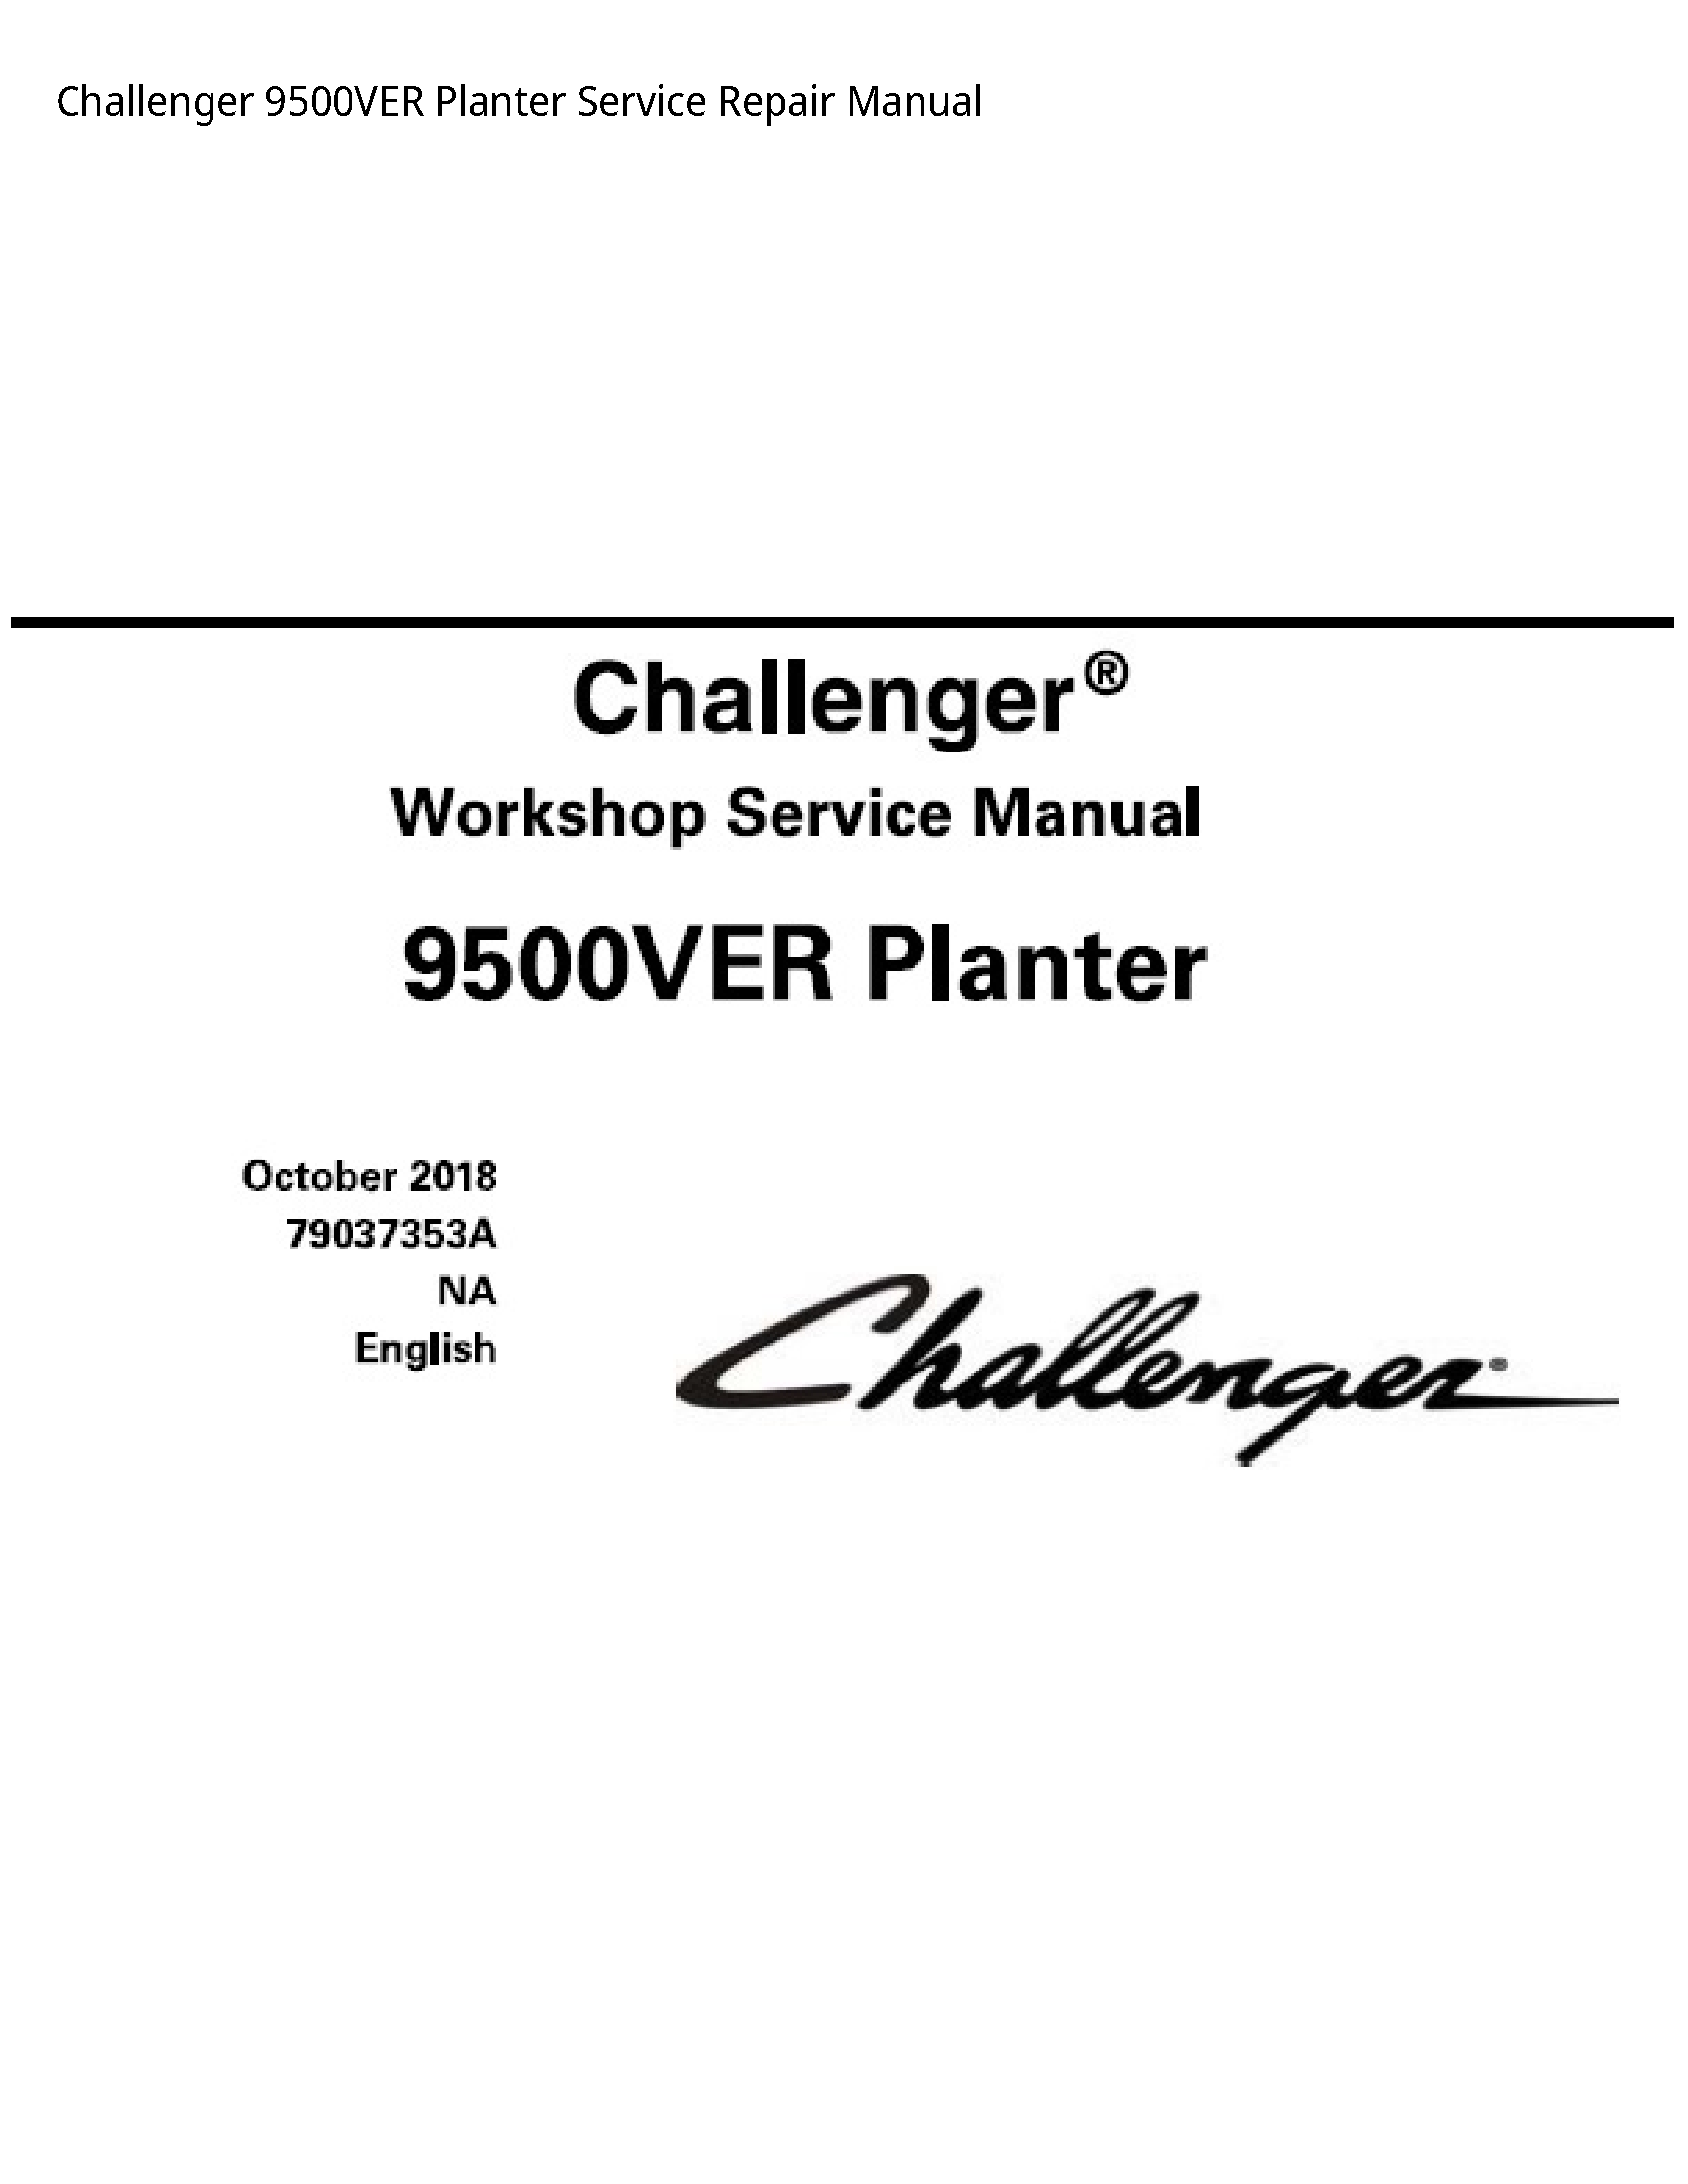 Challenger 9500VER Planter manual